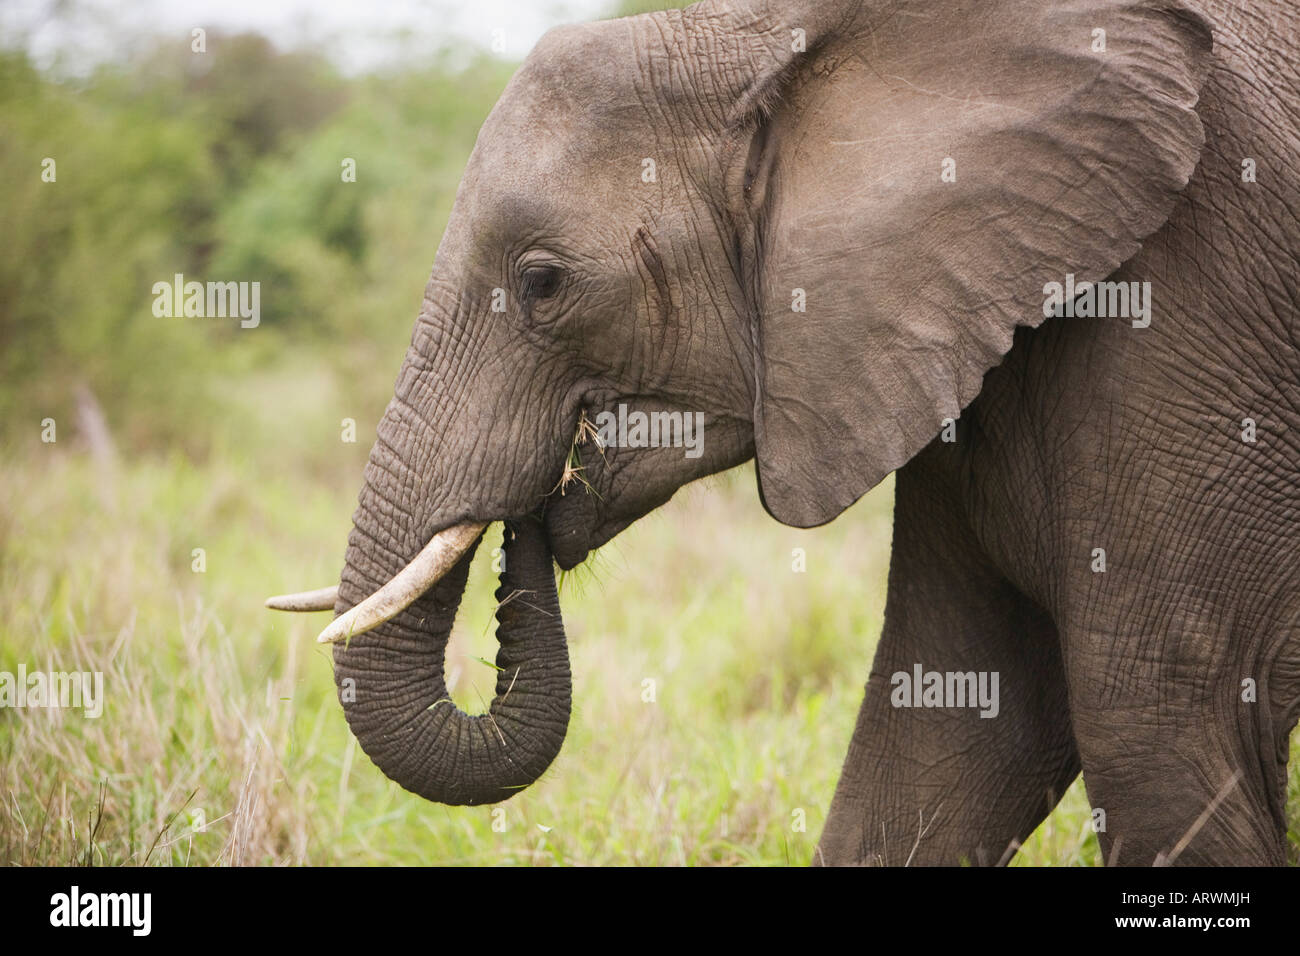 African elephant, tusk, One, Feeding, Eating, Growth, Big, Huge Stock Photo